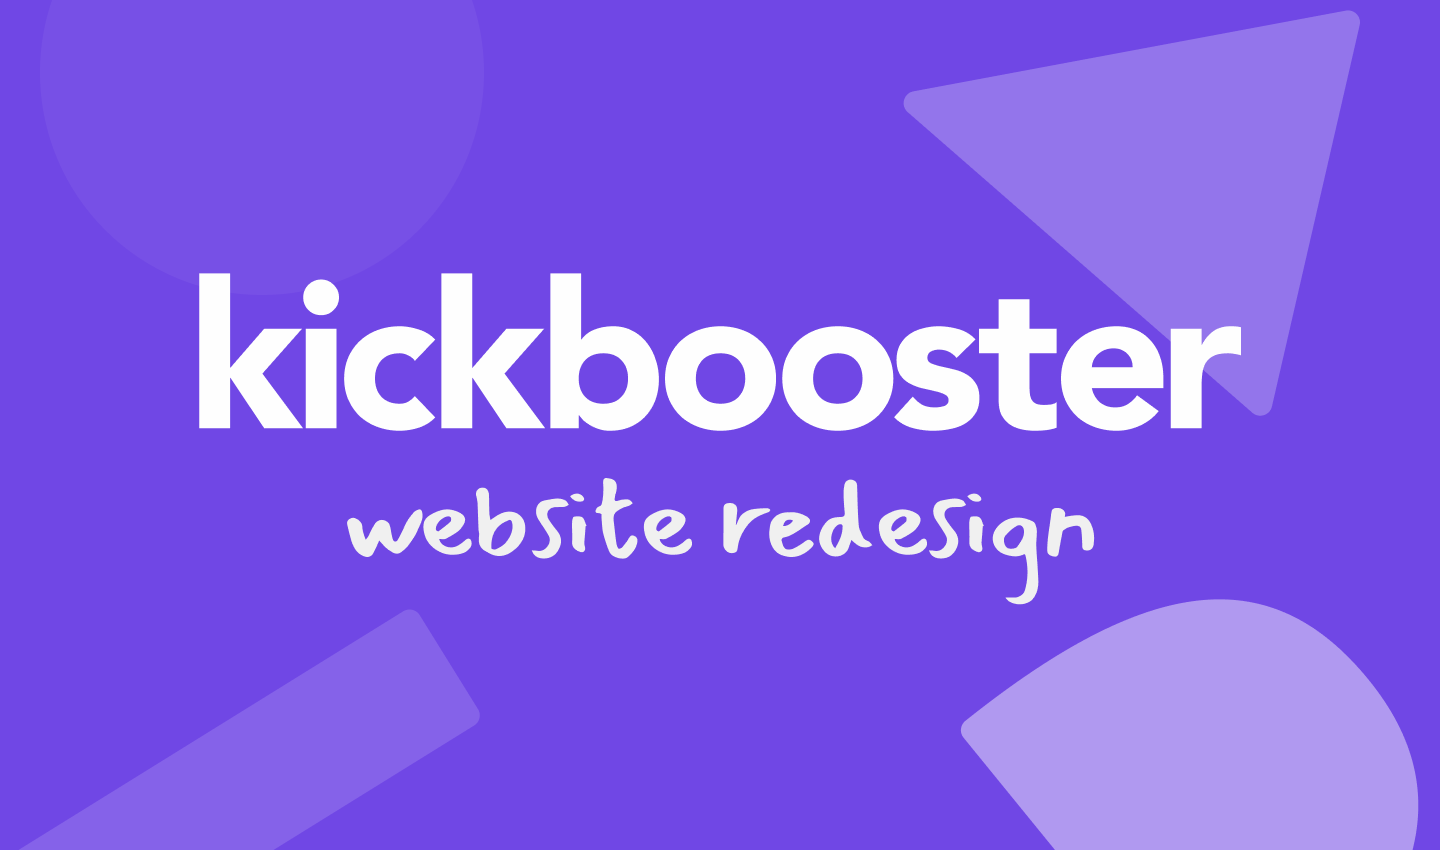 Case study cover: 'Kickbooster website redesign'